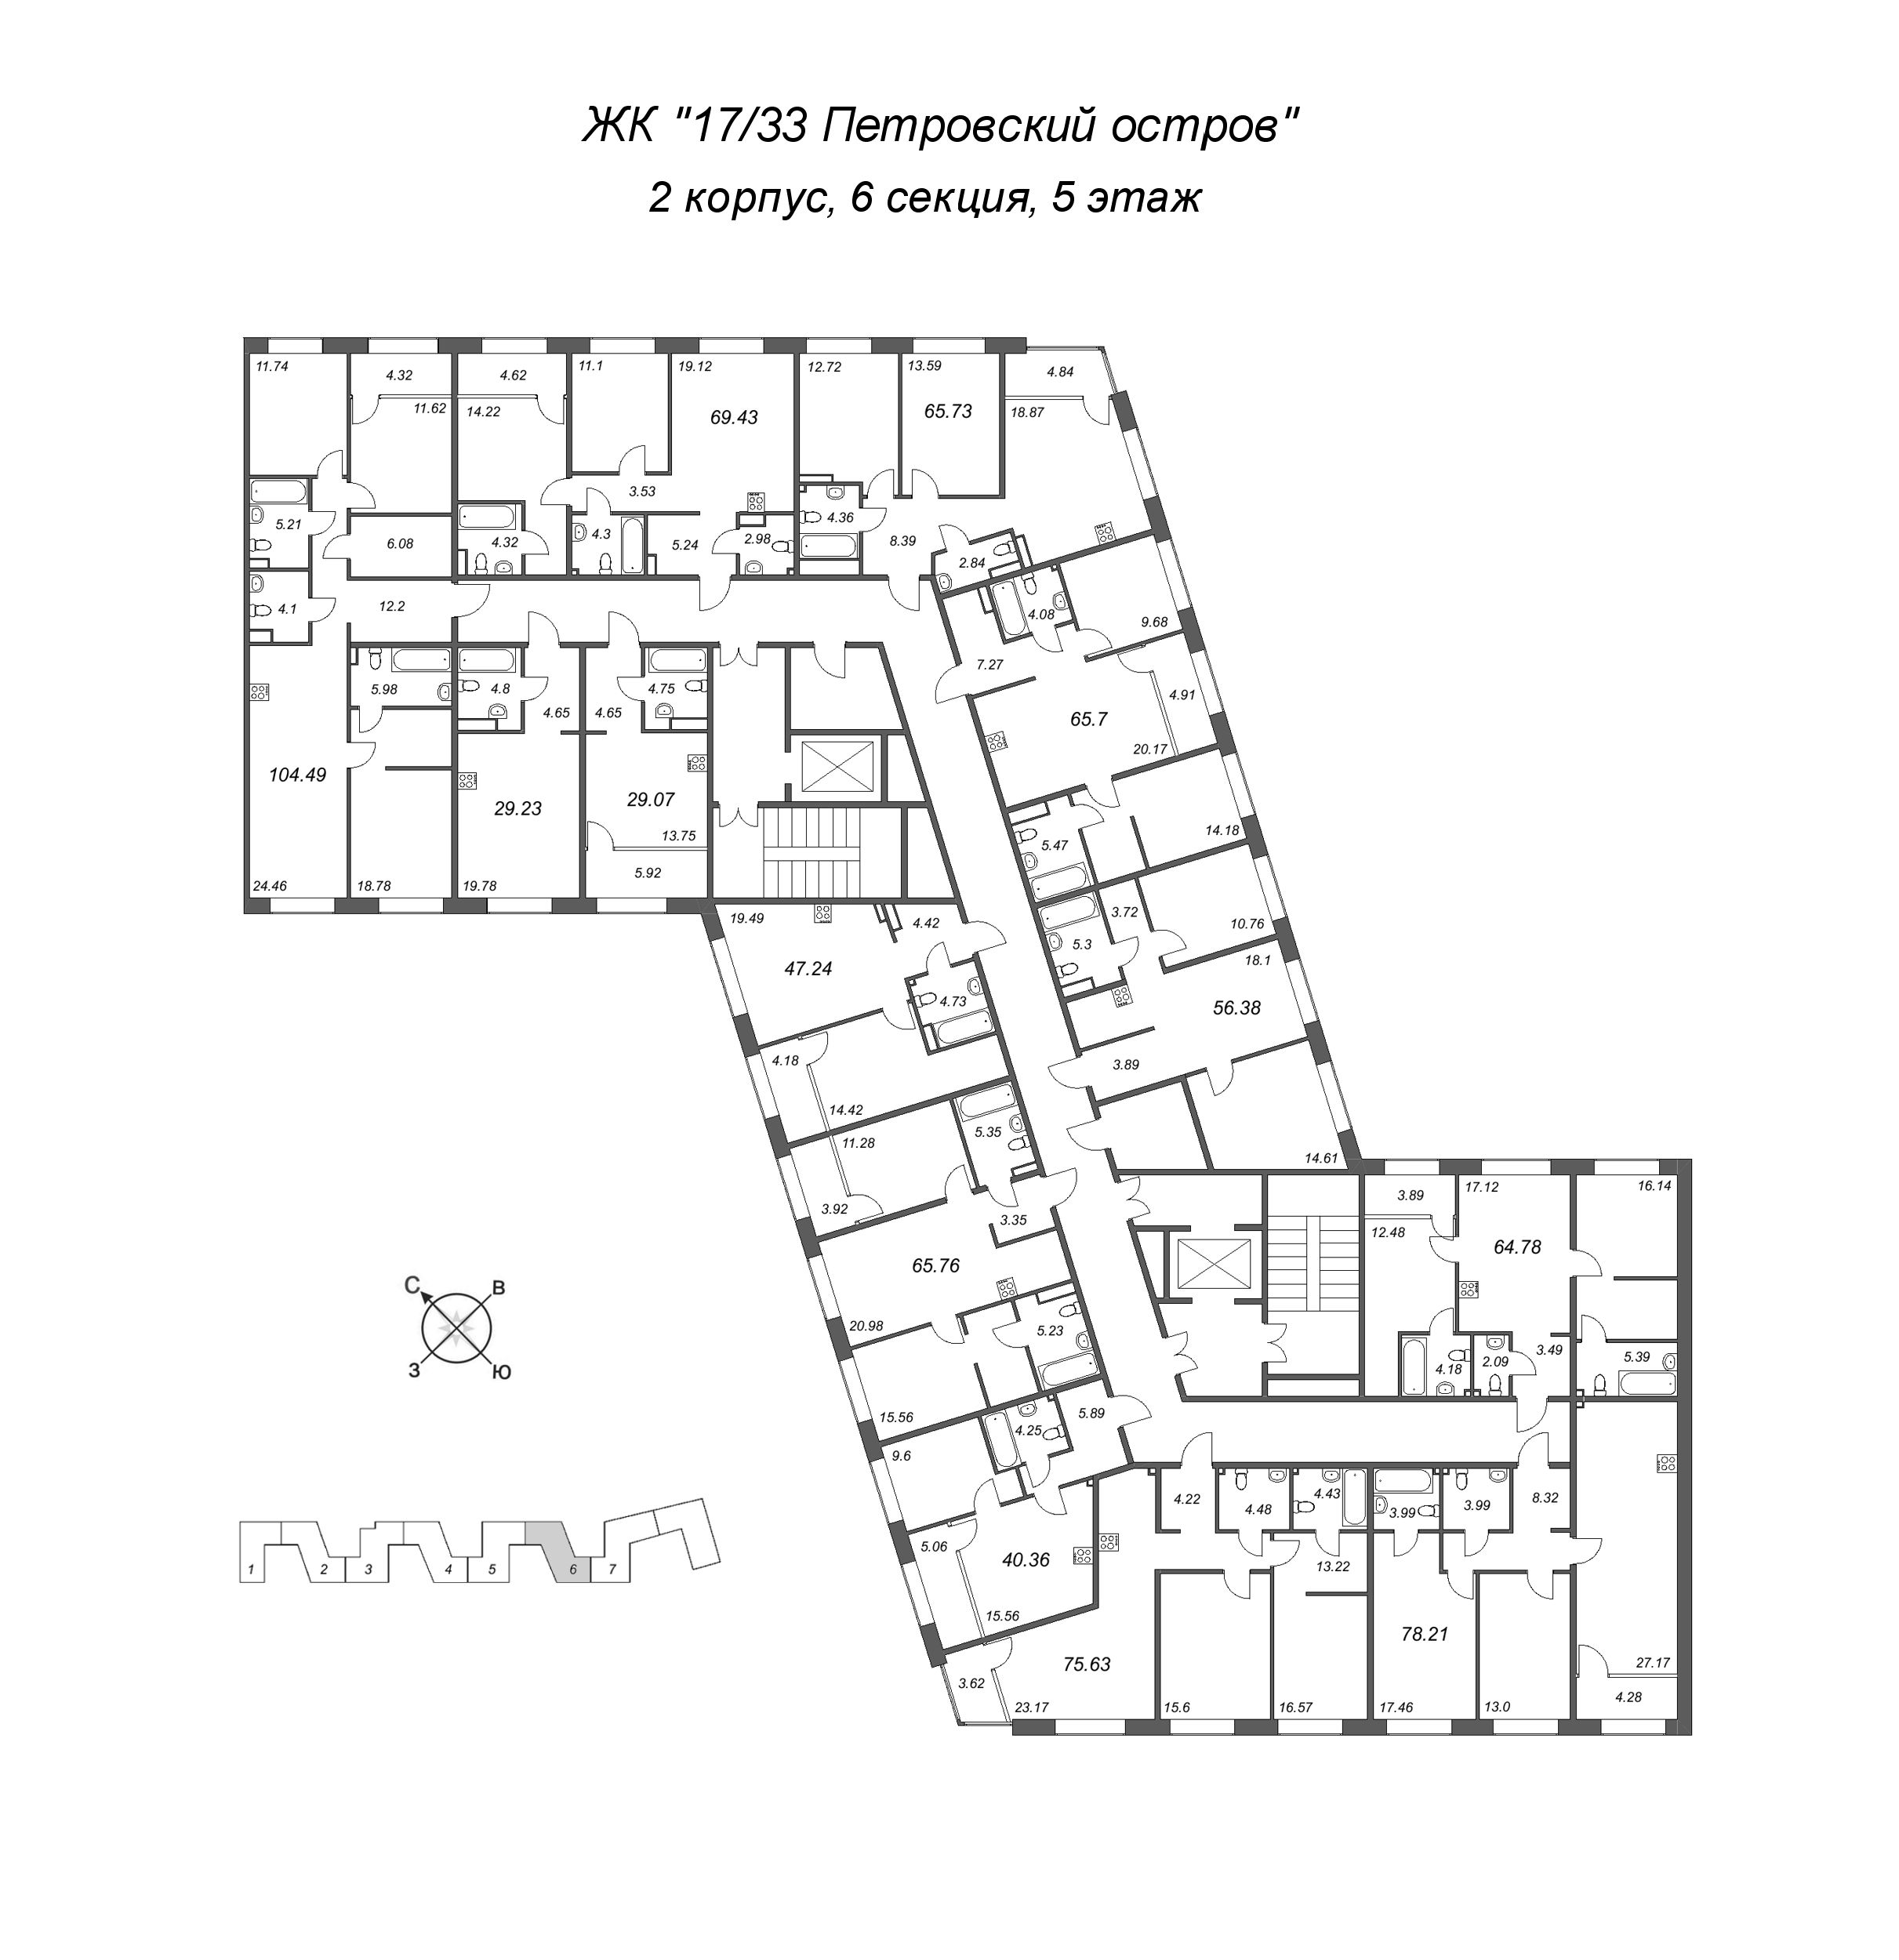 3-комнатная (Евро) квартира, 56.38 м² - планировка этажа